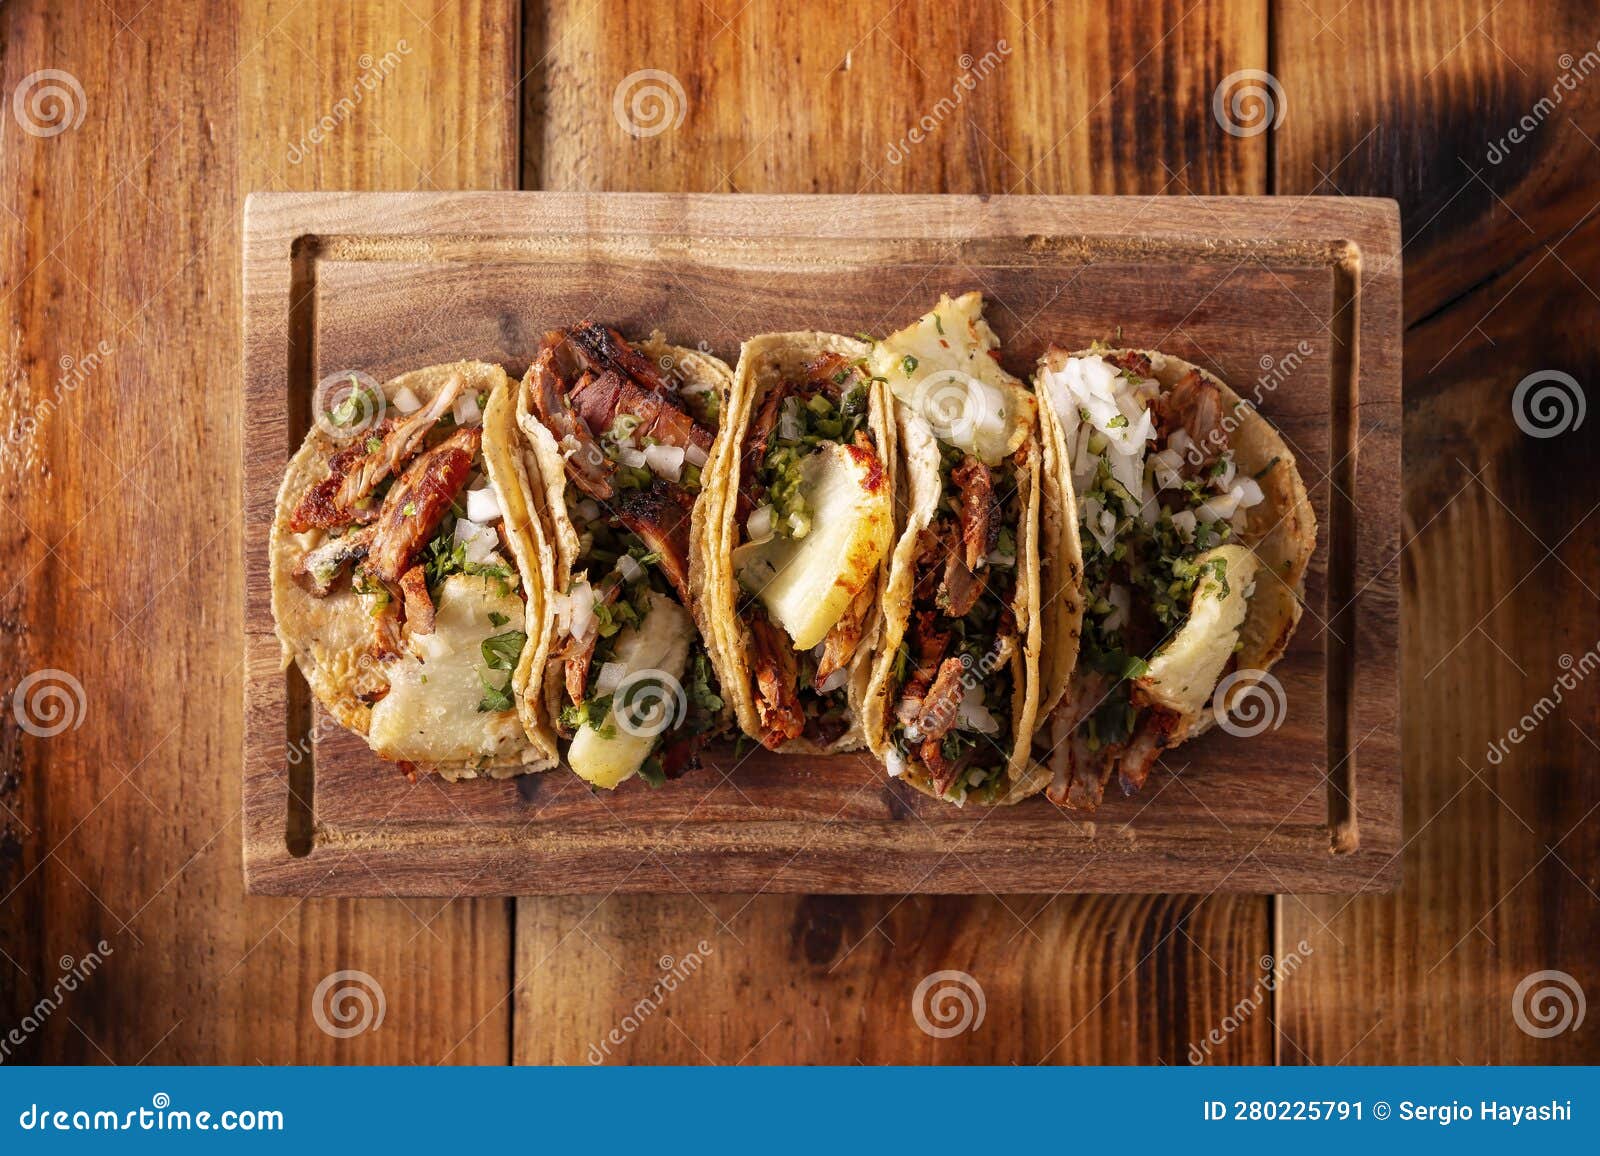 tacos al pastor table topview